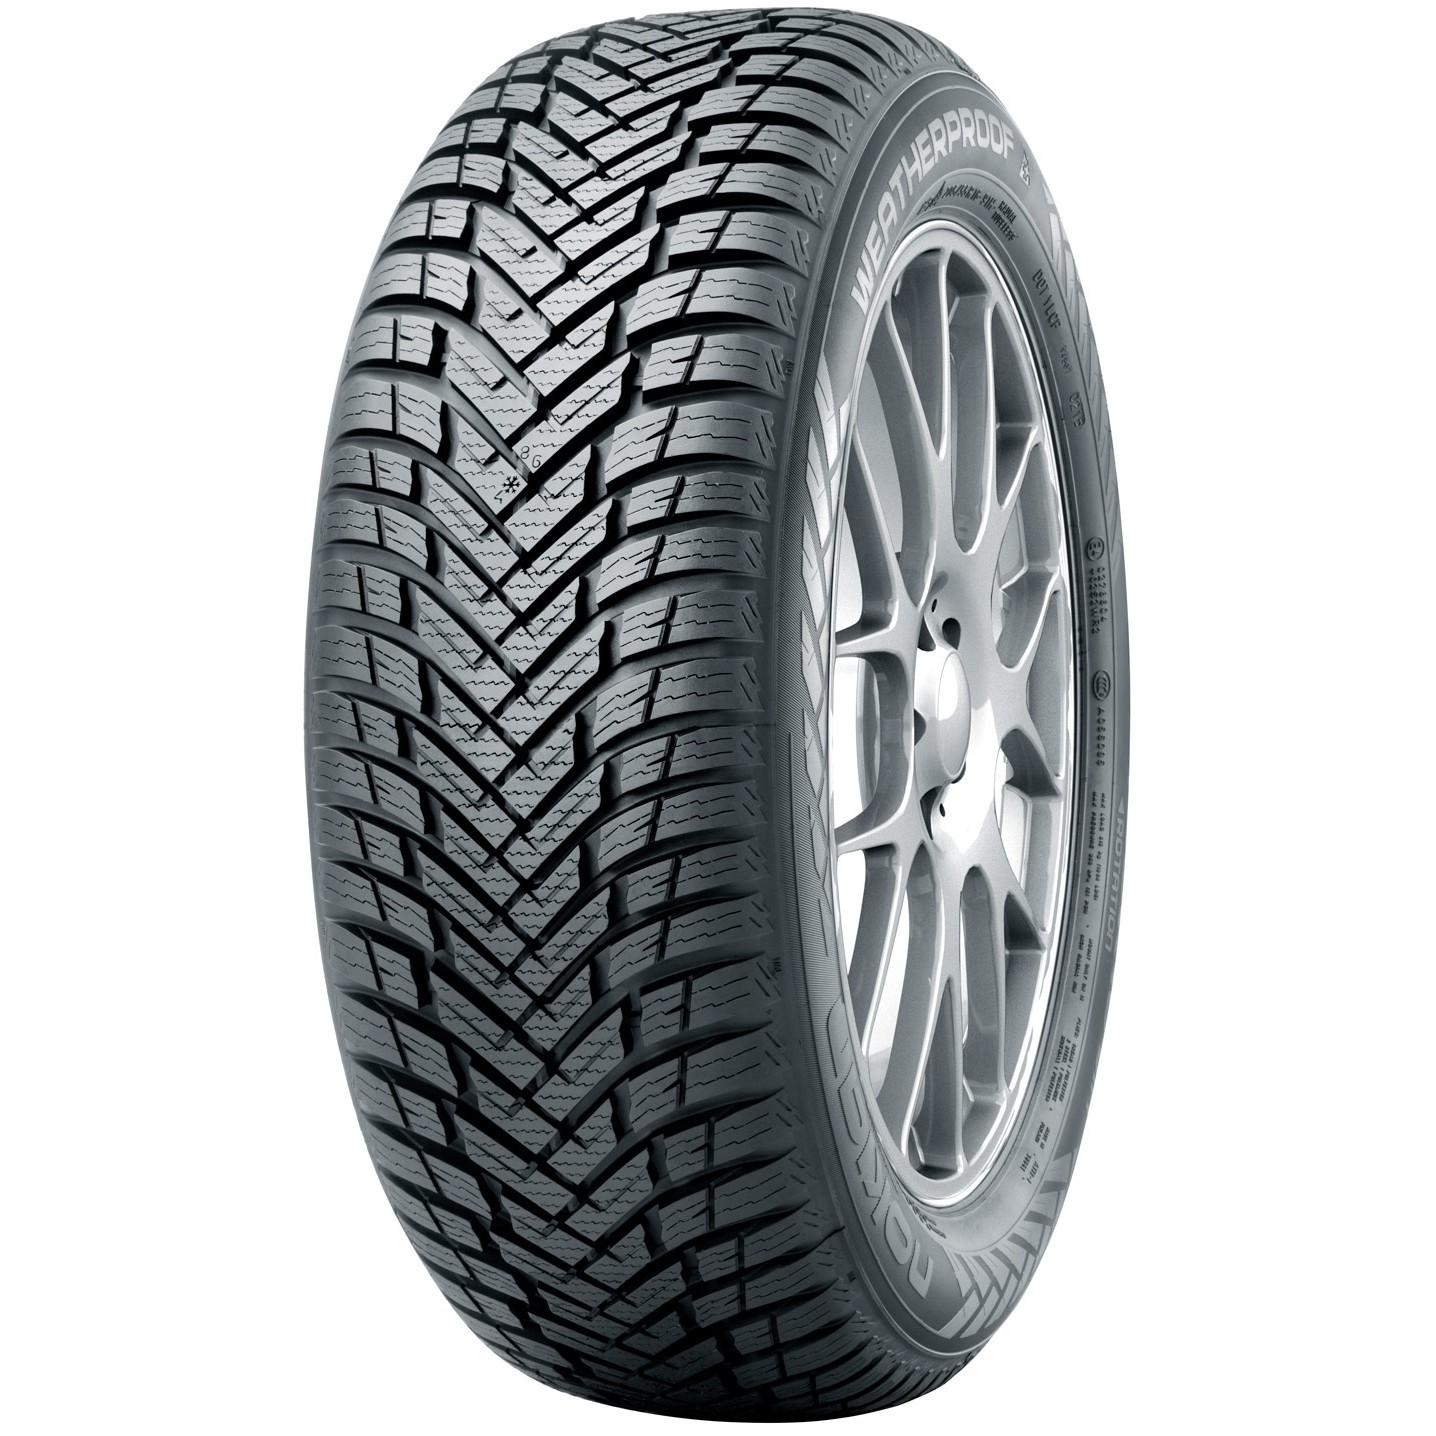 Nokian Tyres WeatherProof (245/45R18 100V) - зображення 1